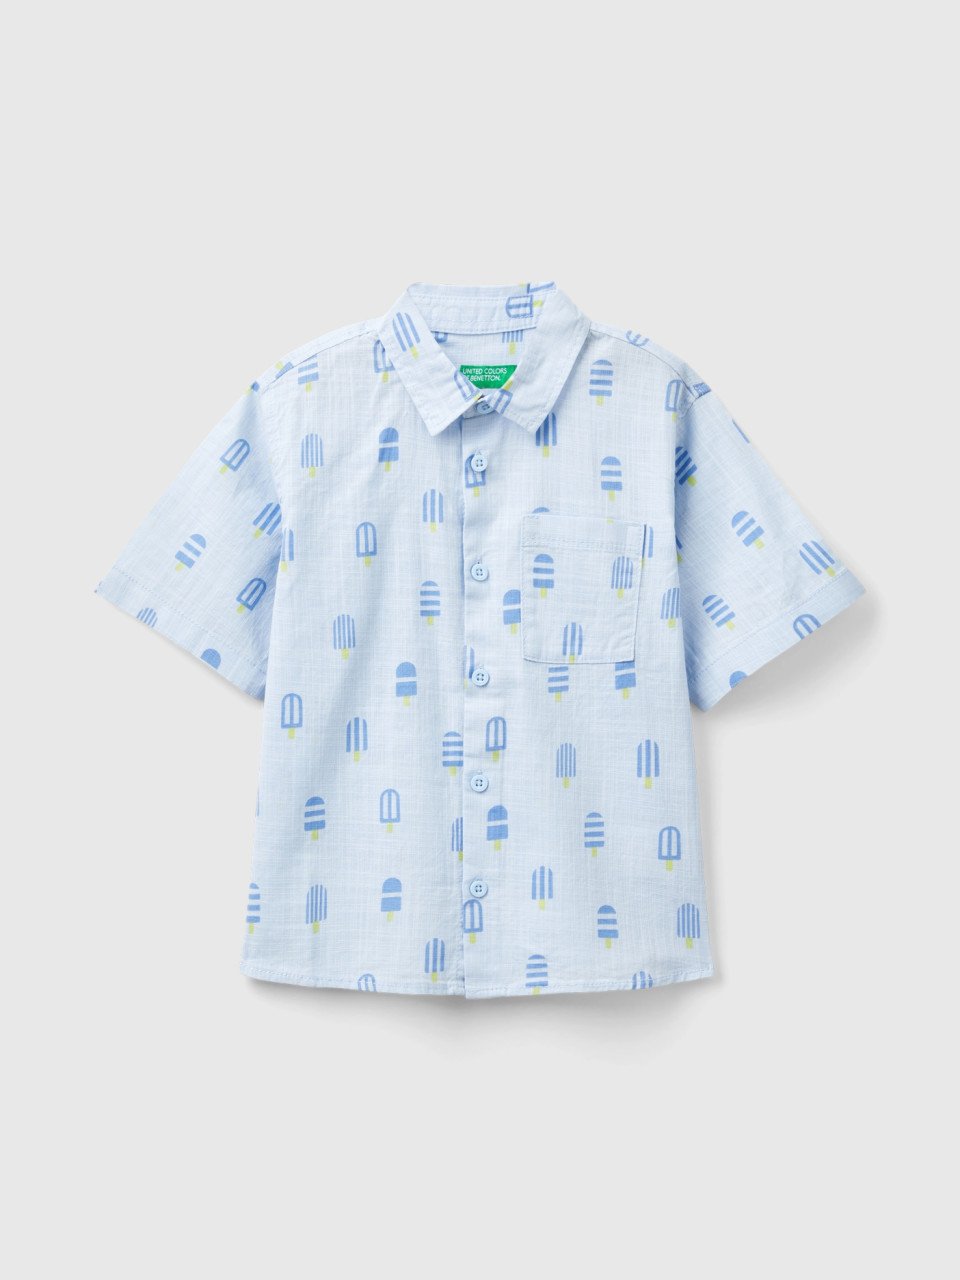 Benetton, Shirt With Ice Cream Print, Sky Blue, Kids